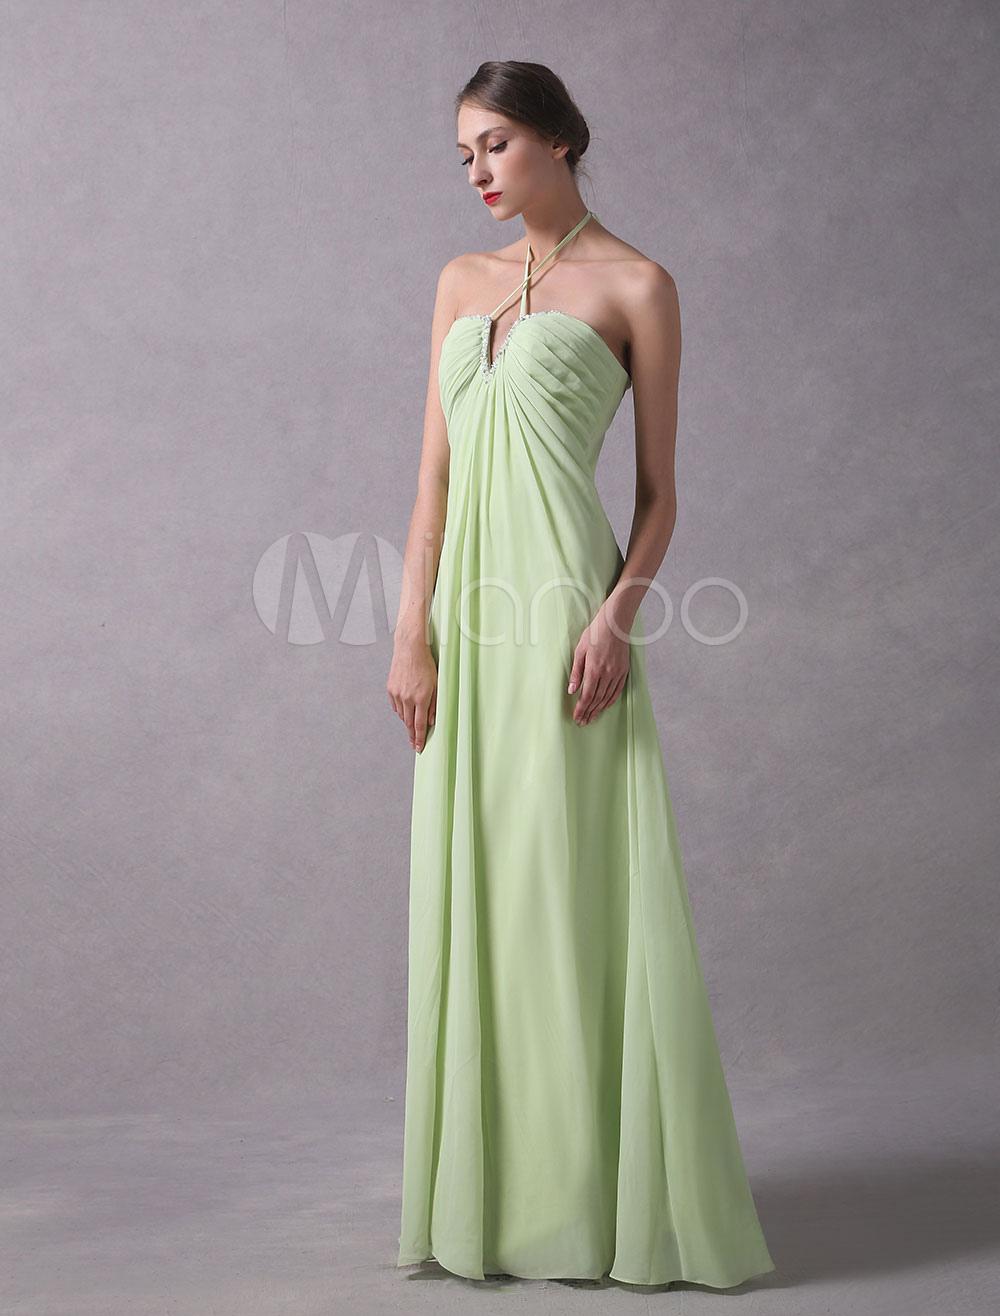 Prom Dresses Long Chiffon Neon Green Halter Backless Beaded Pleated Floor Length Formal Dress (Wedding) photo